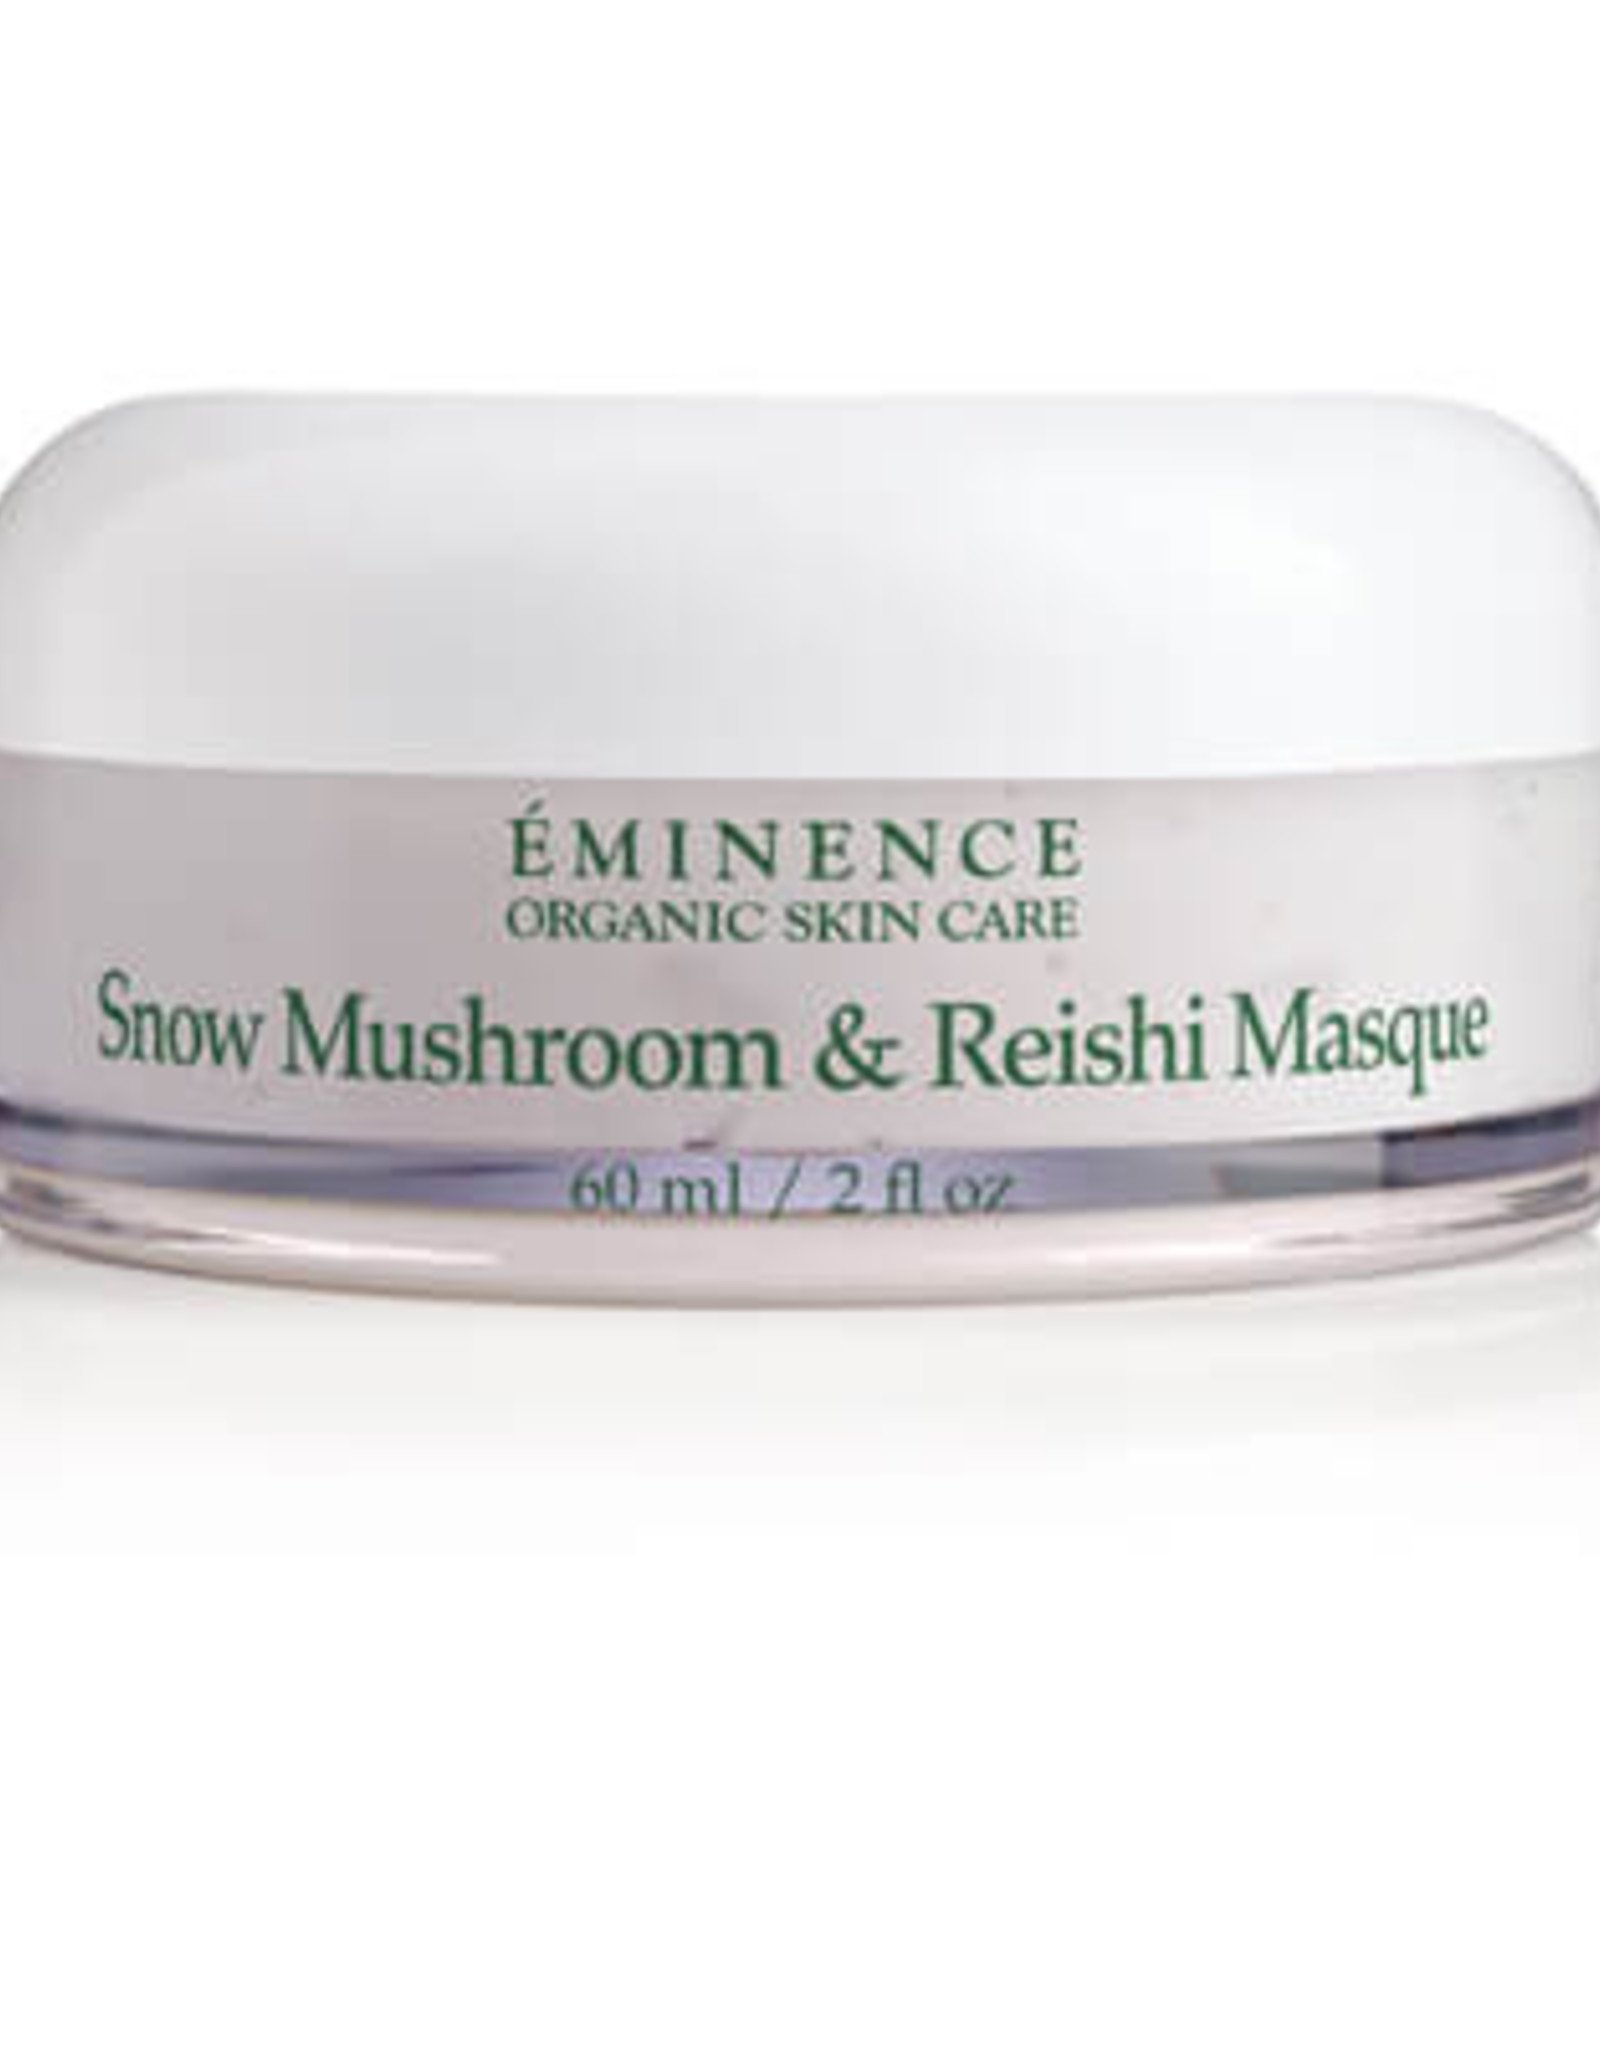 Eminence Organic Skin Care Snow Mushroom & Reishi Masque